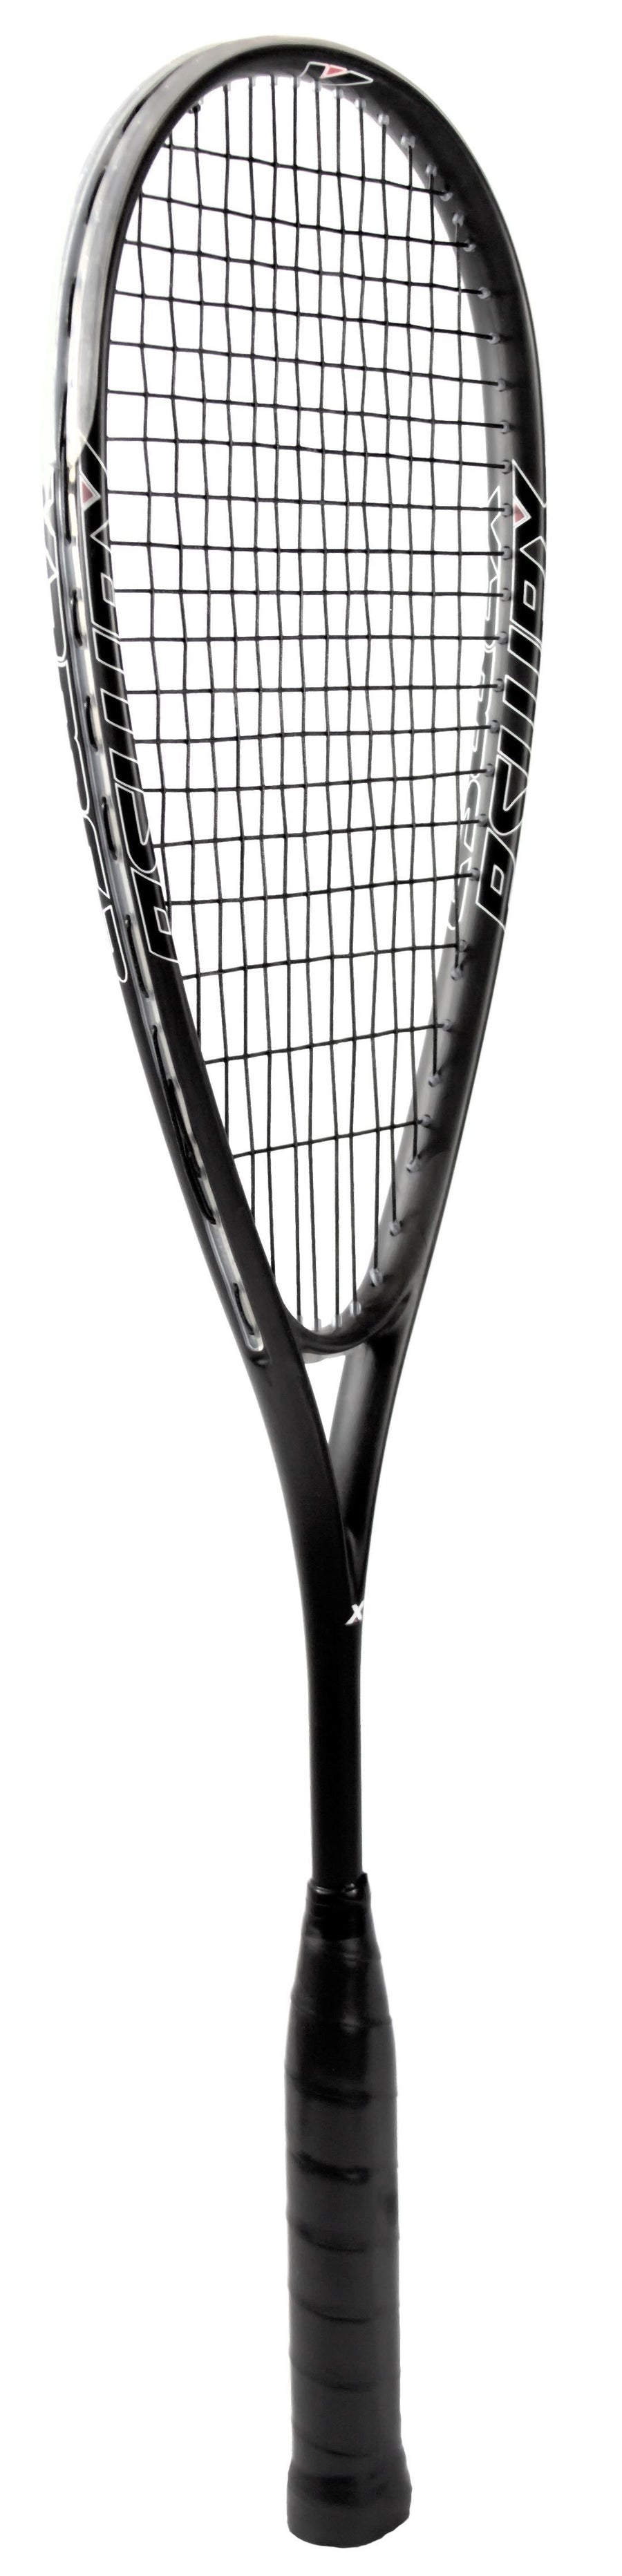 Xamsa Crucible Squash Racquet Squash Racquets Xamsa Strung with Xamsa PM 18 